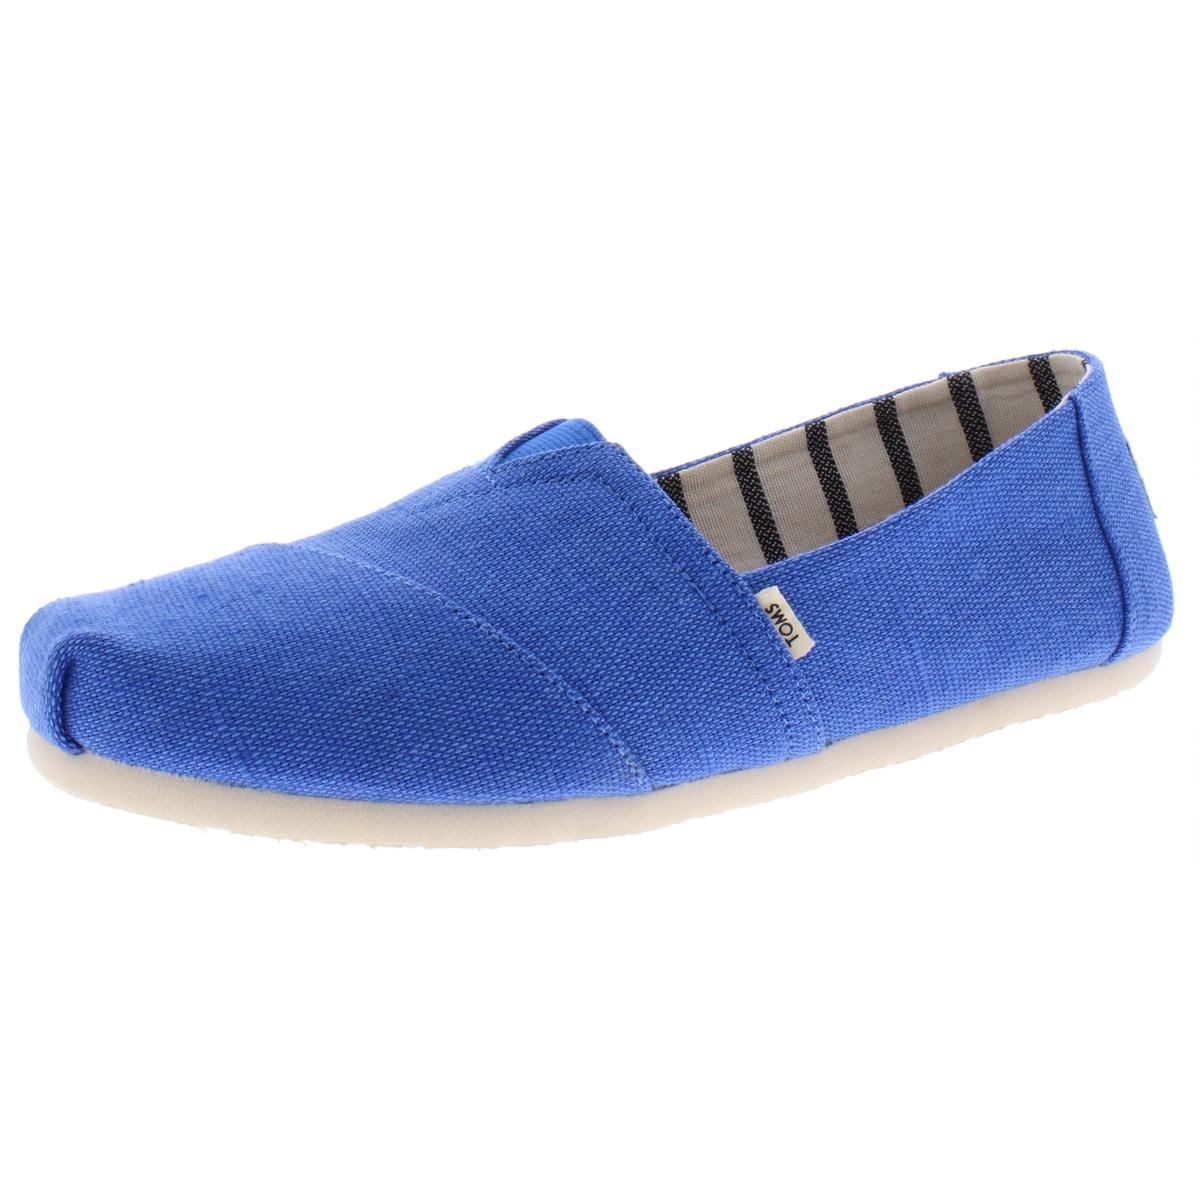 Toms Womens Venice Blue Canvas Casual Shoes Flats 6.5 Medium (B,M) BHFO ...